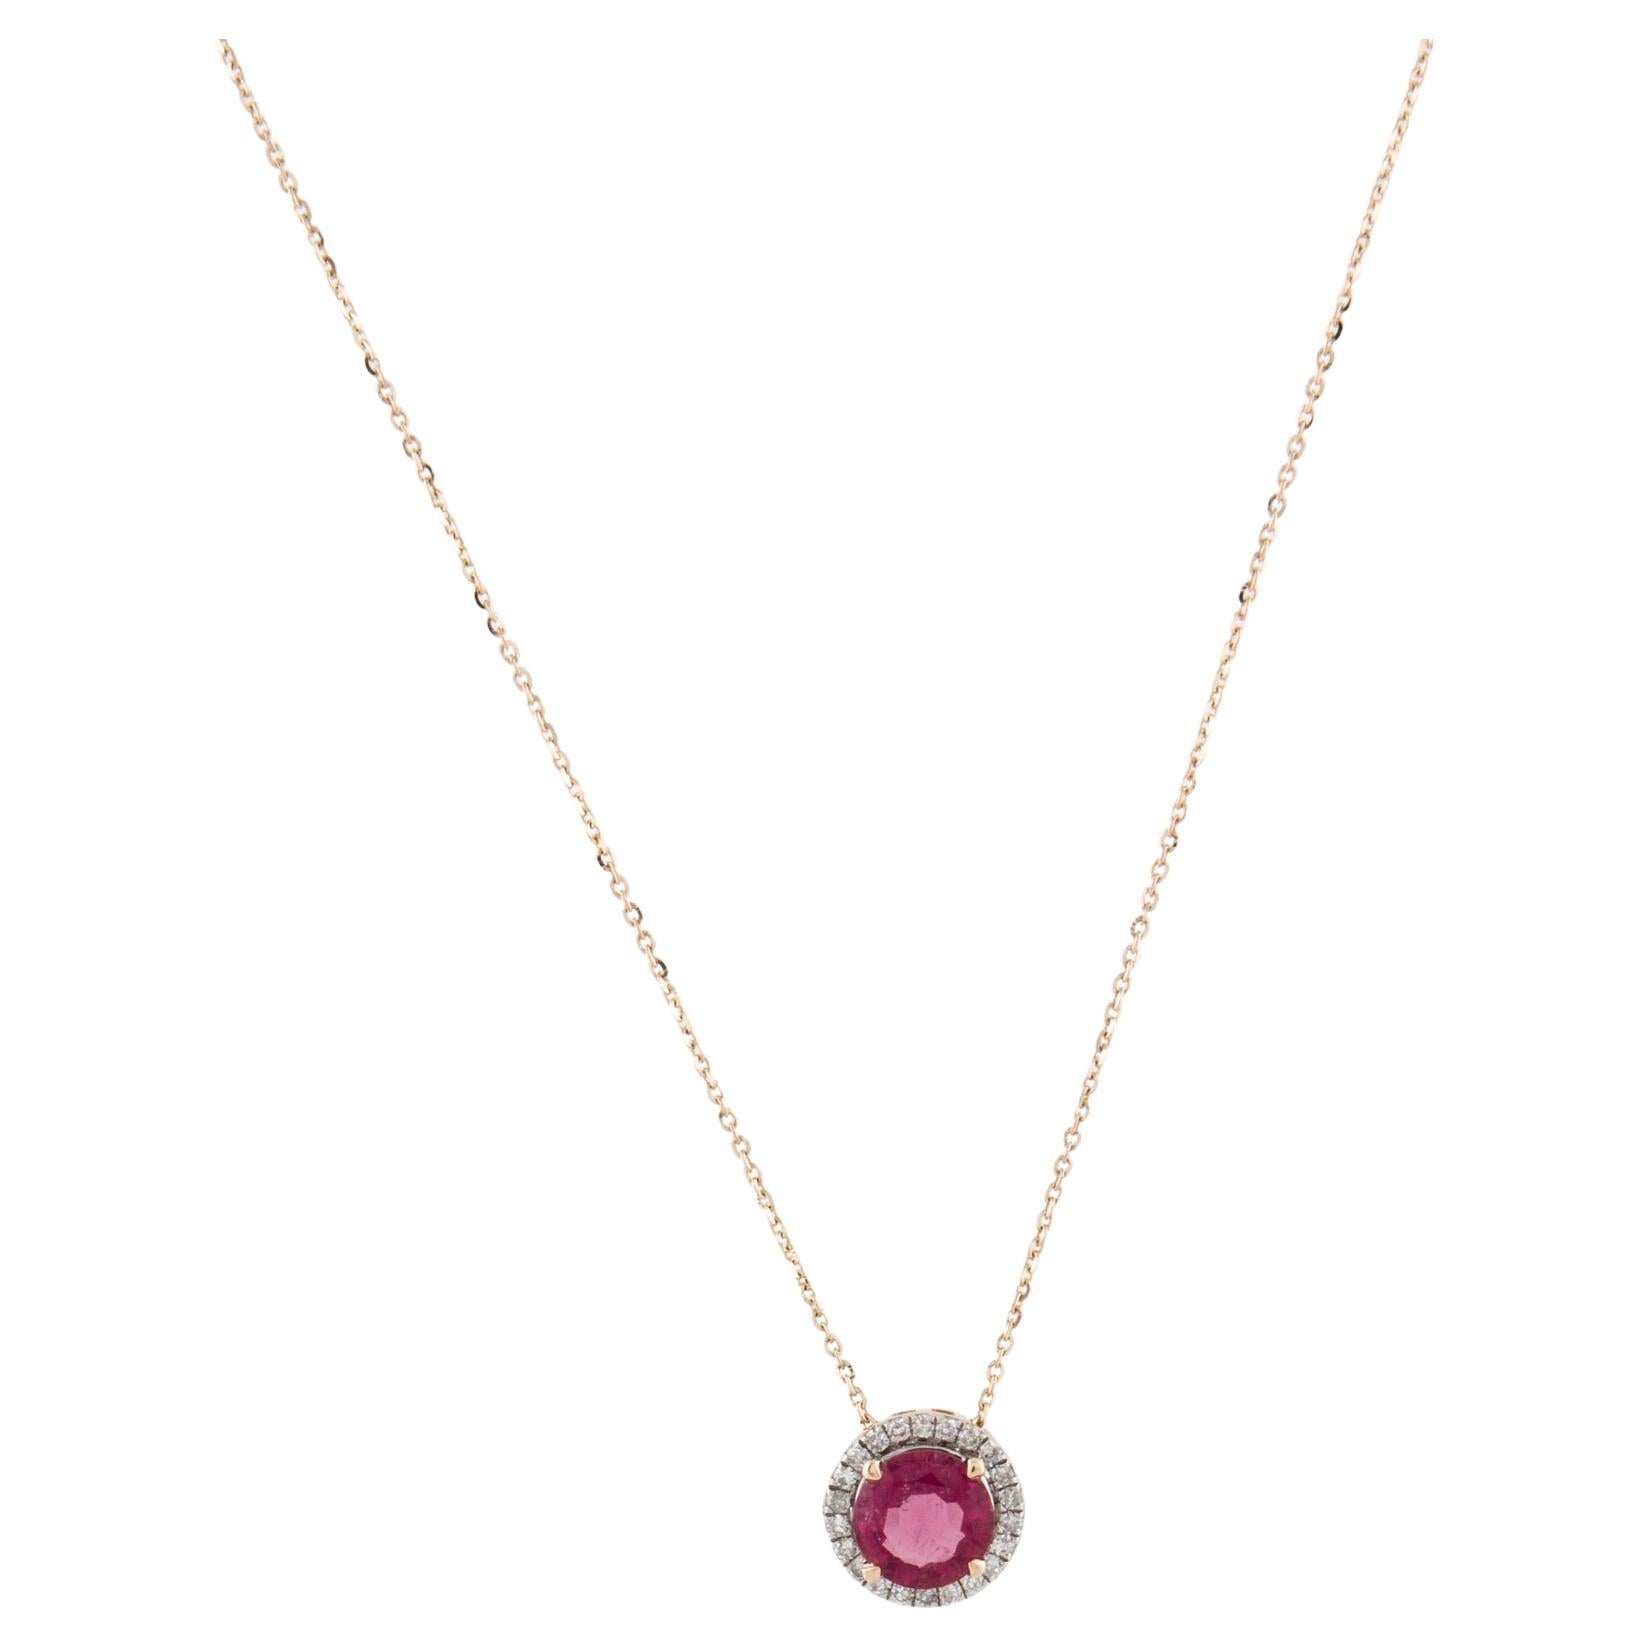 14K 1.09ct Tourmaline & Diamond Pendant Necklace: Luxury Statement Jewelry Piece